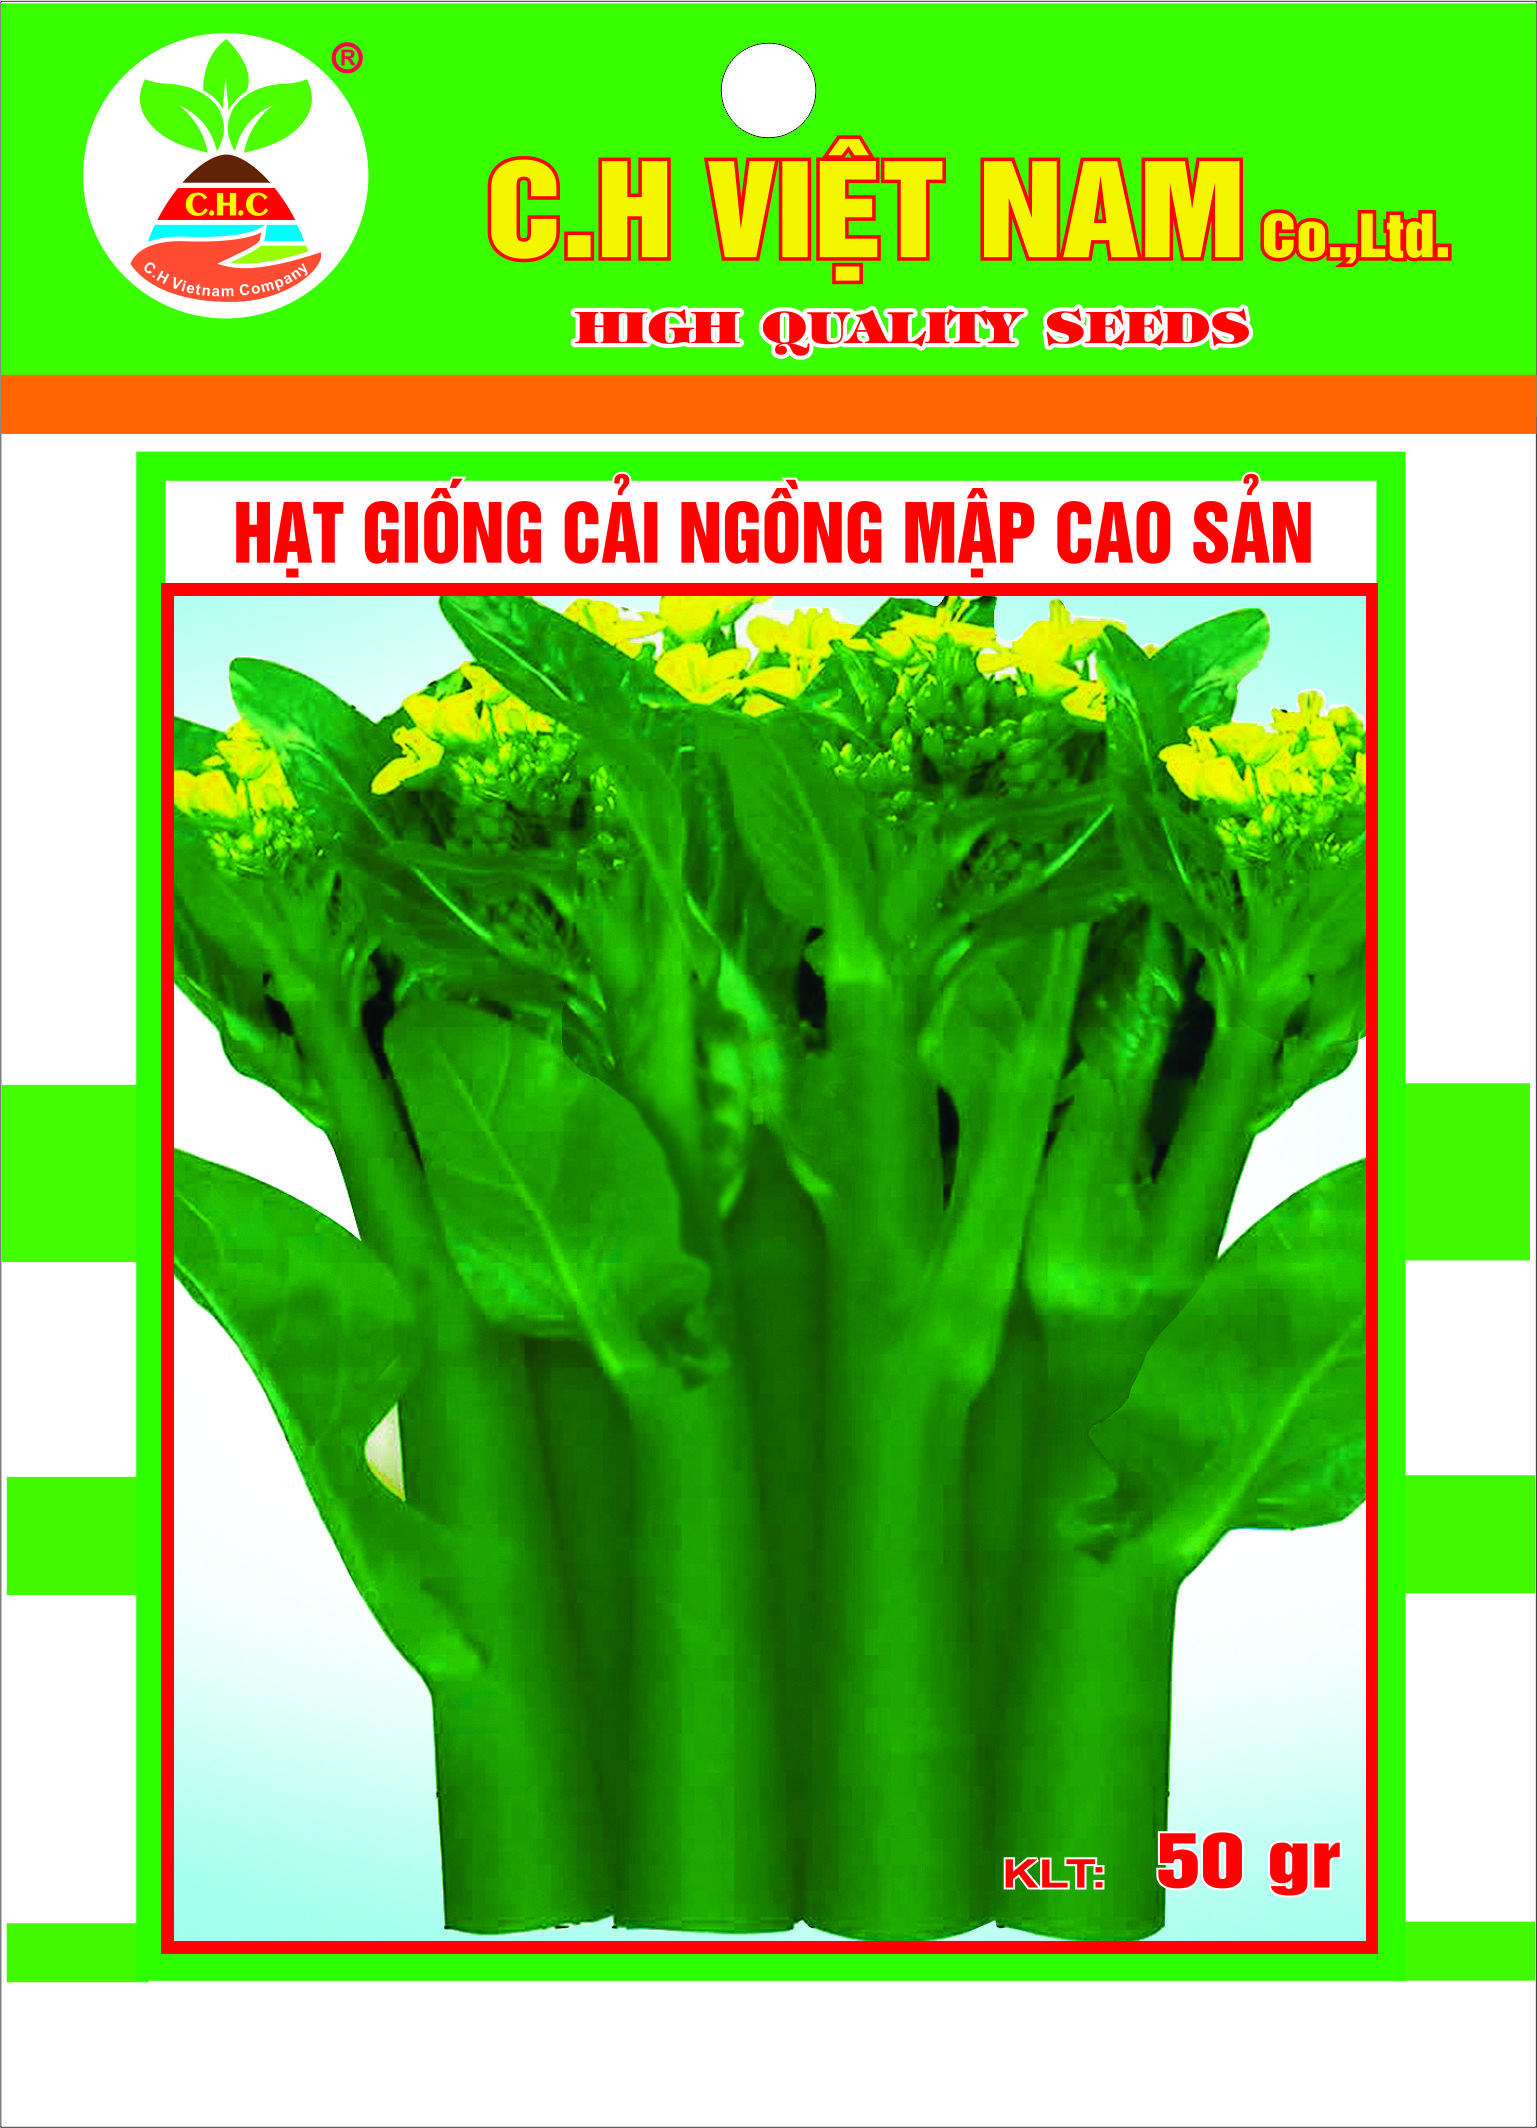 High yield fat kale seeds